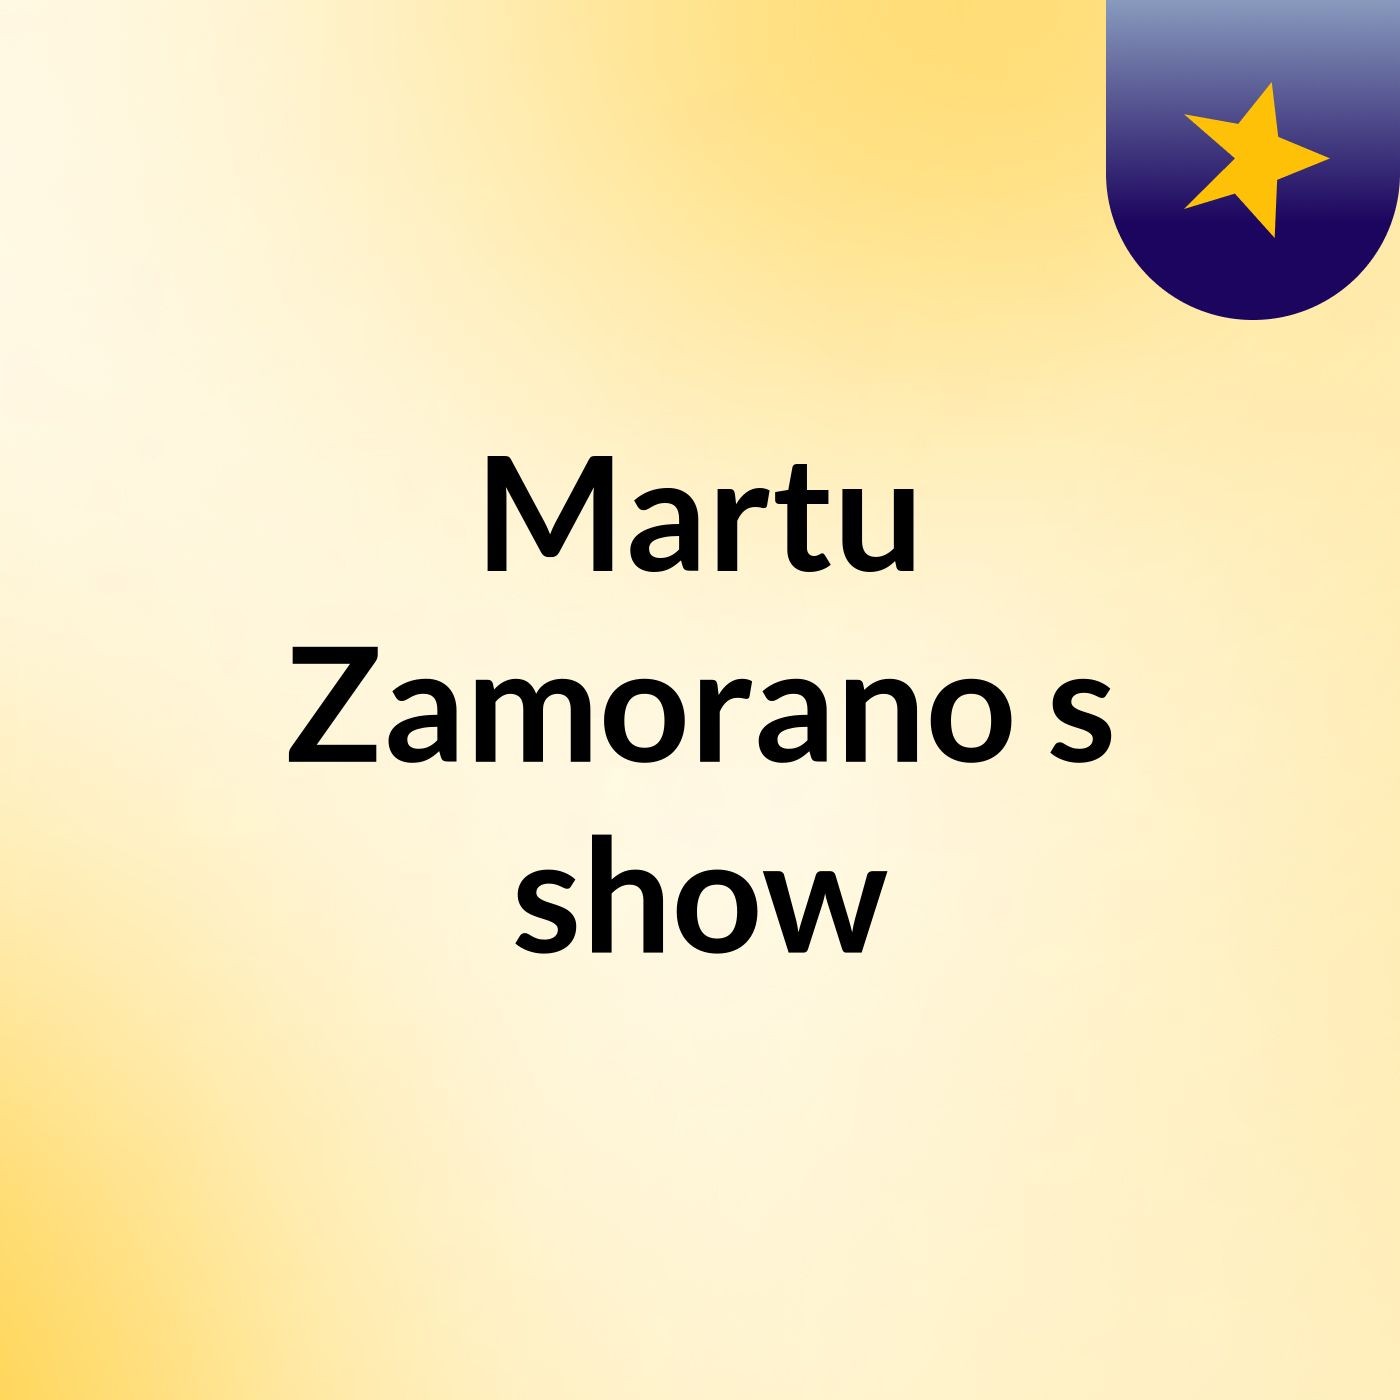 Martu Zamorano's show